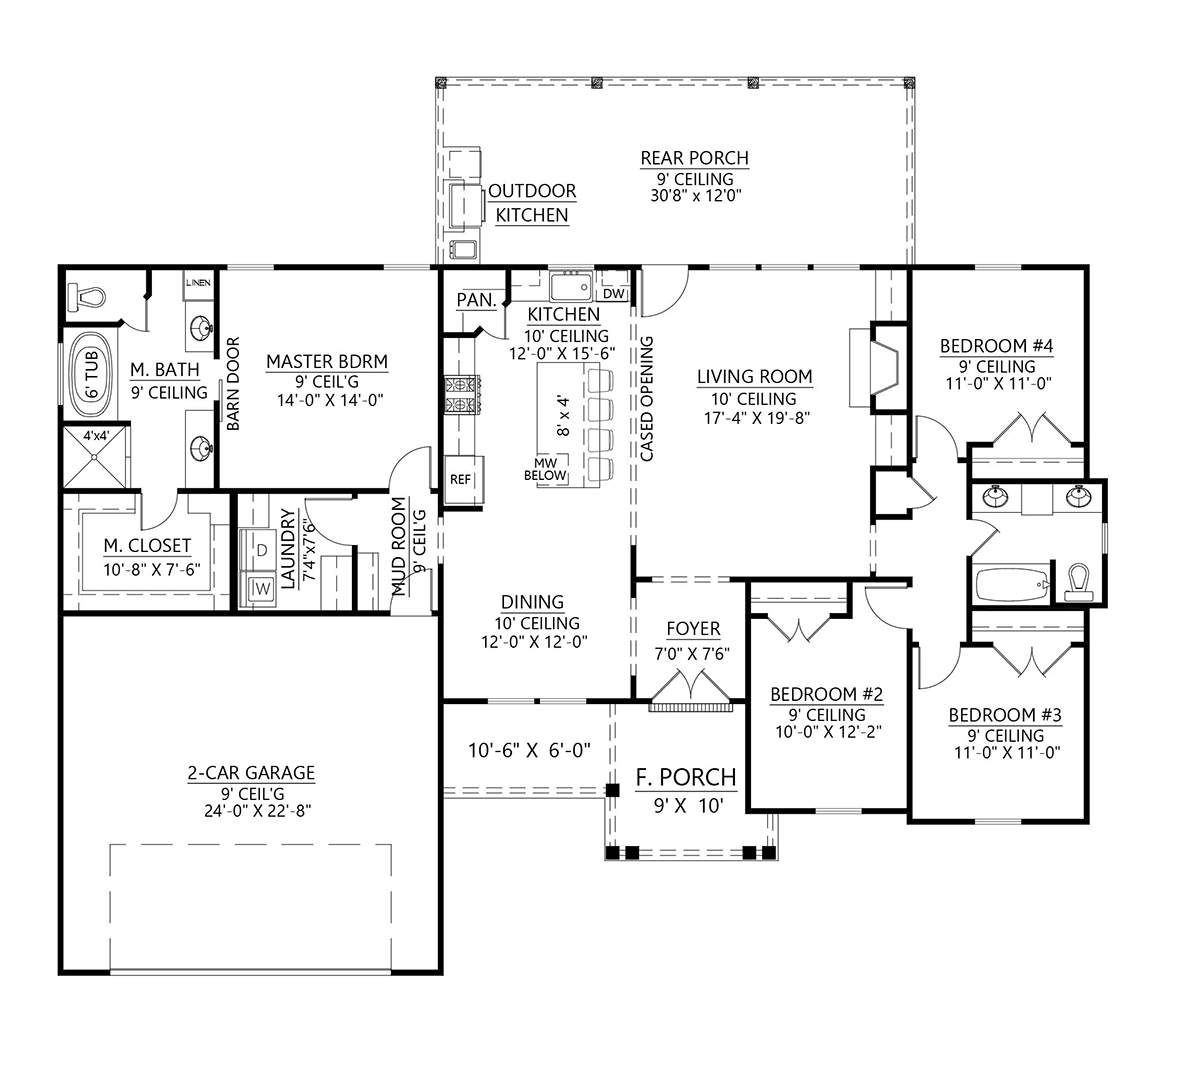 3,453 sq/ft Custom 4 Bedroom House Blueprints COMPLETE SET in PDF Plan P7 